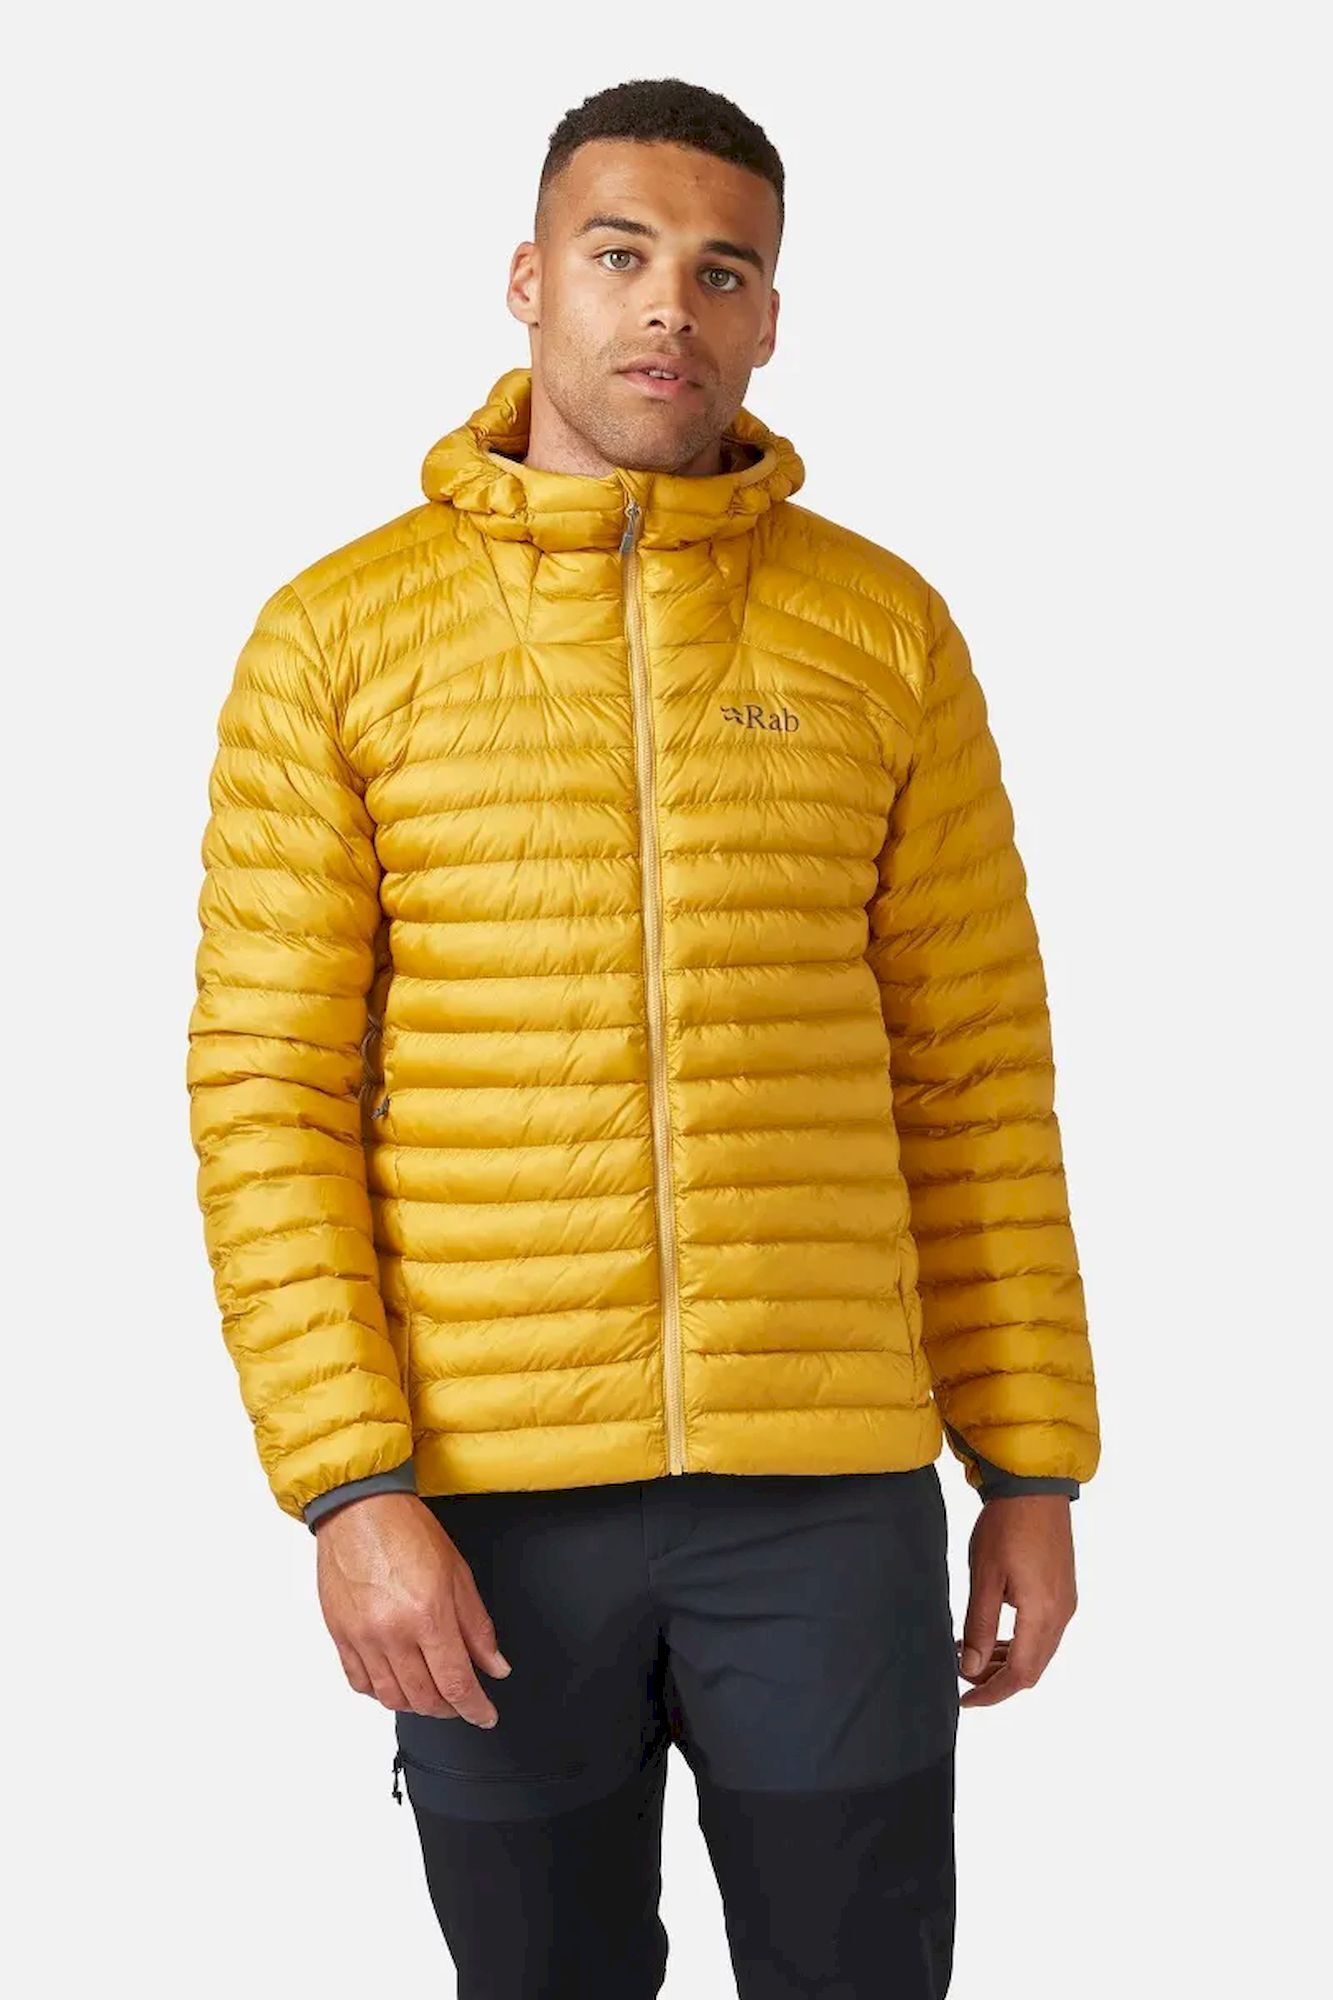 Rab Cirrus Alpine Jacket - Synthetic jacket - Men's